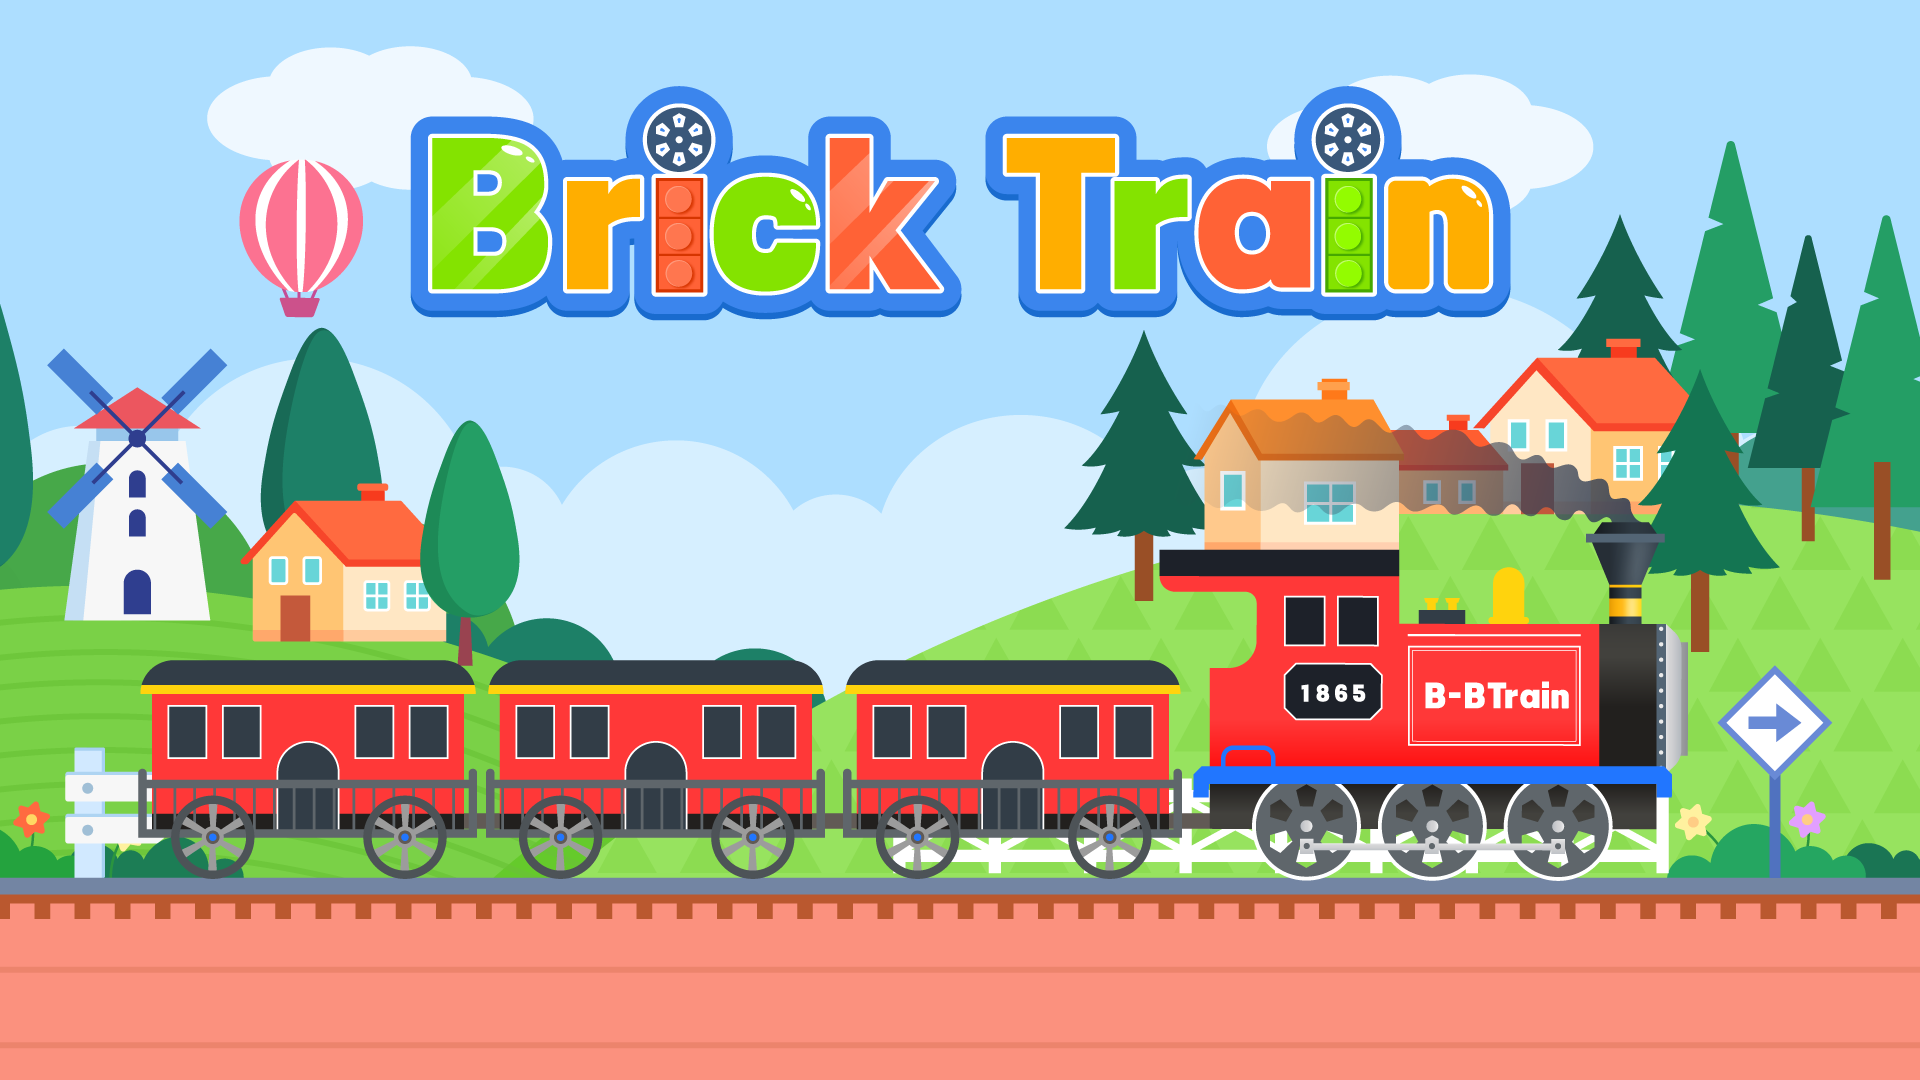 The train built from bricks